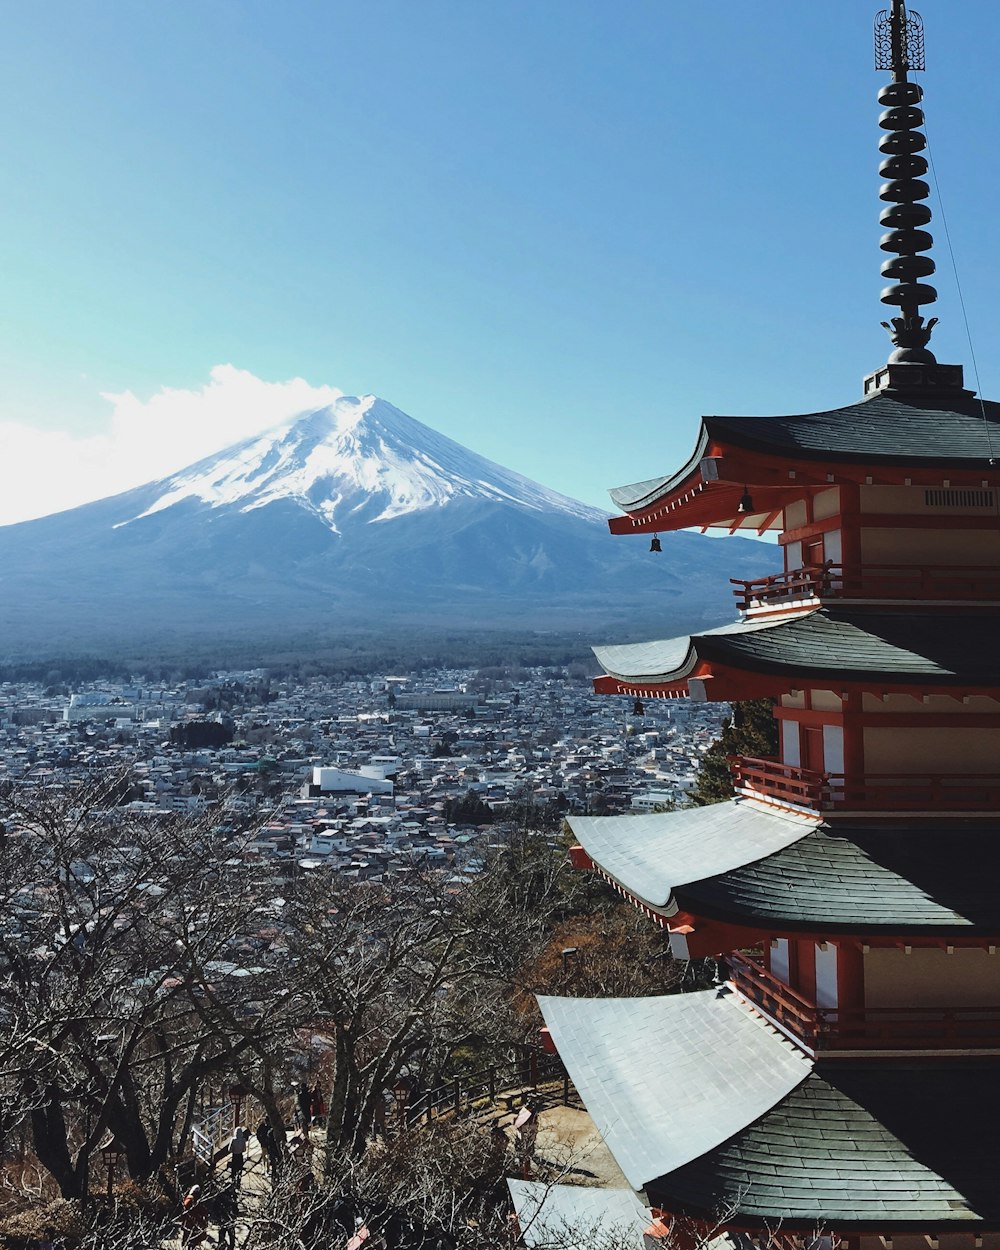 Mount Fuji Tokyo Japan Pictures Download Free Images On Unsplash